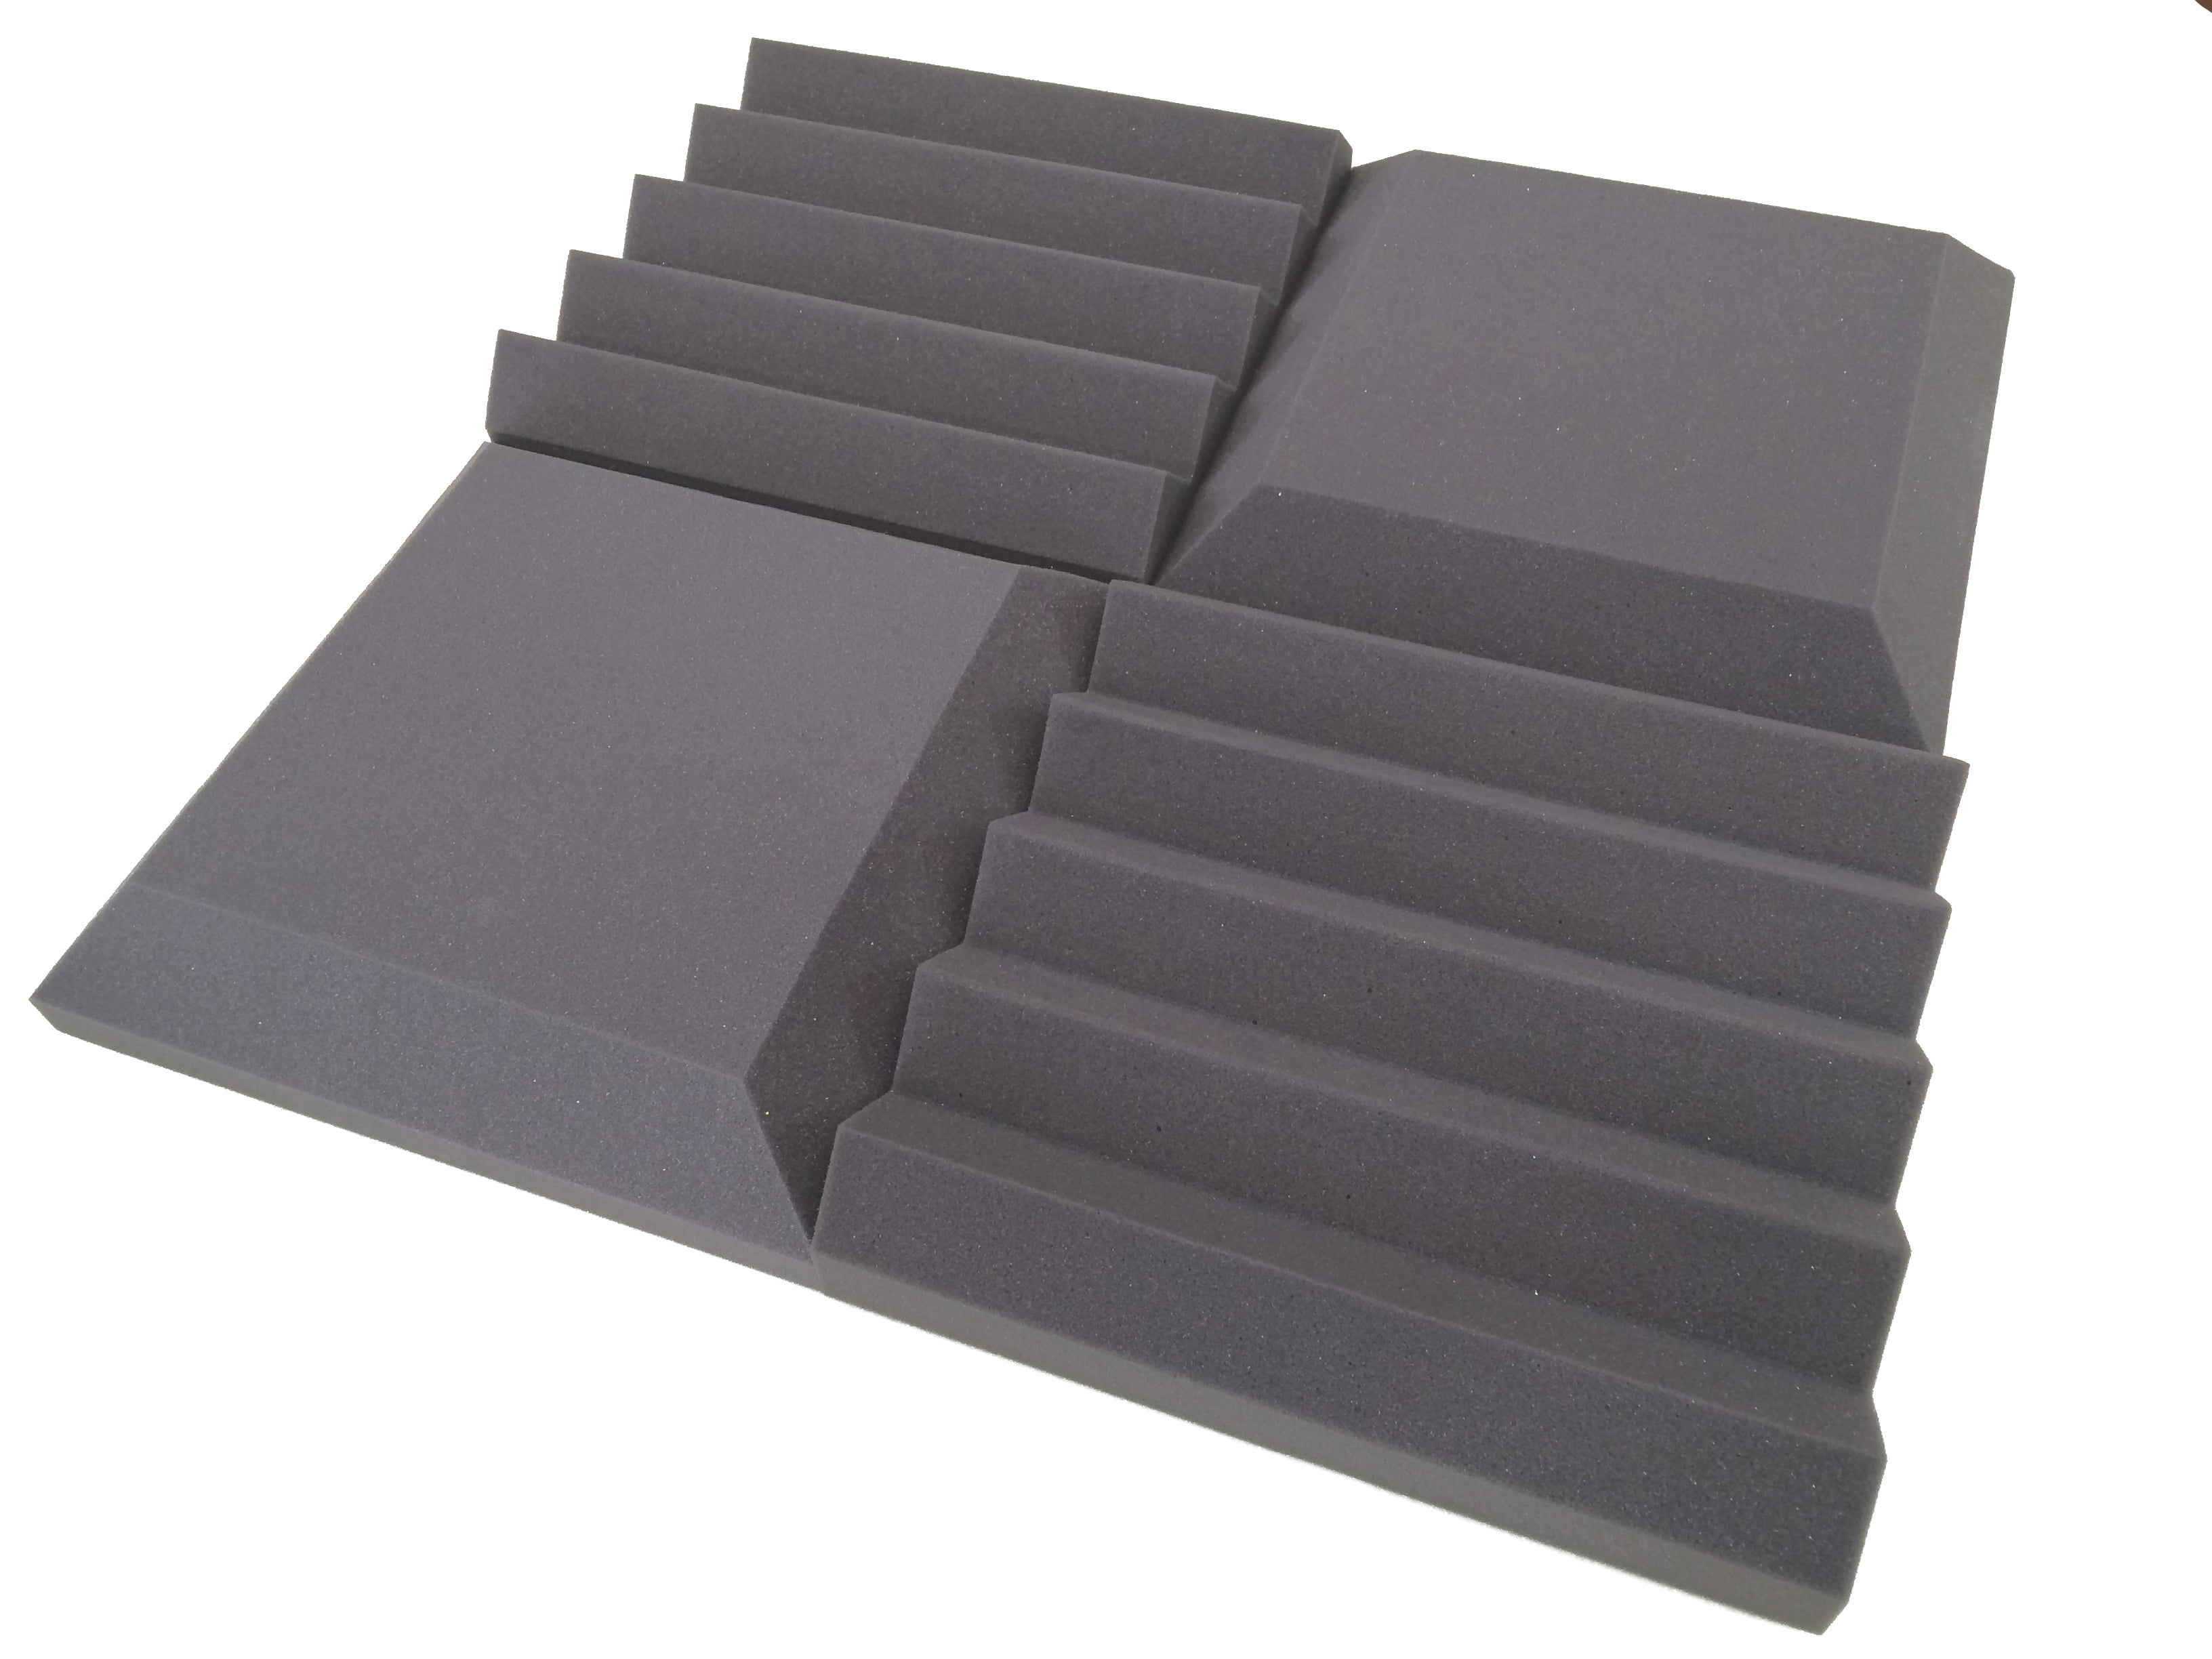 Euphonic Wedge PRO Acoustic Studio Foam Tile Pack